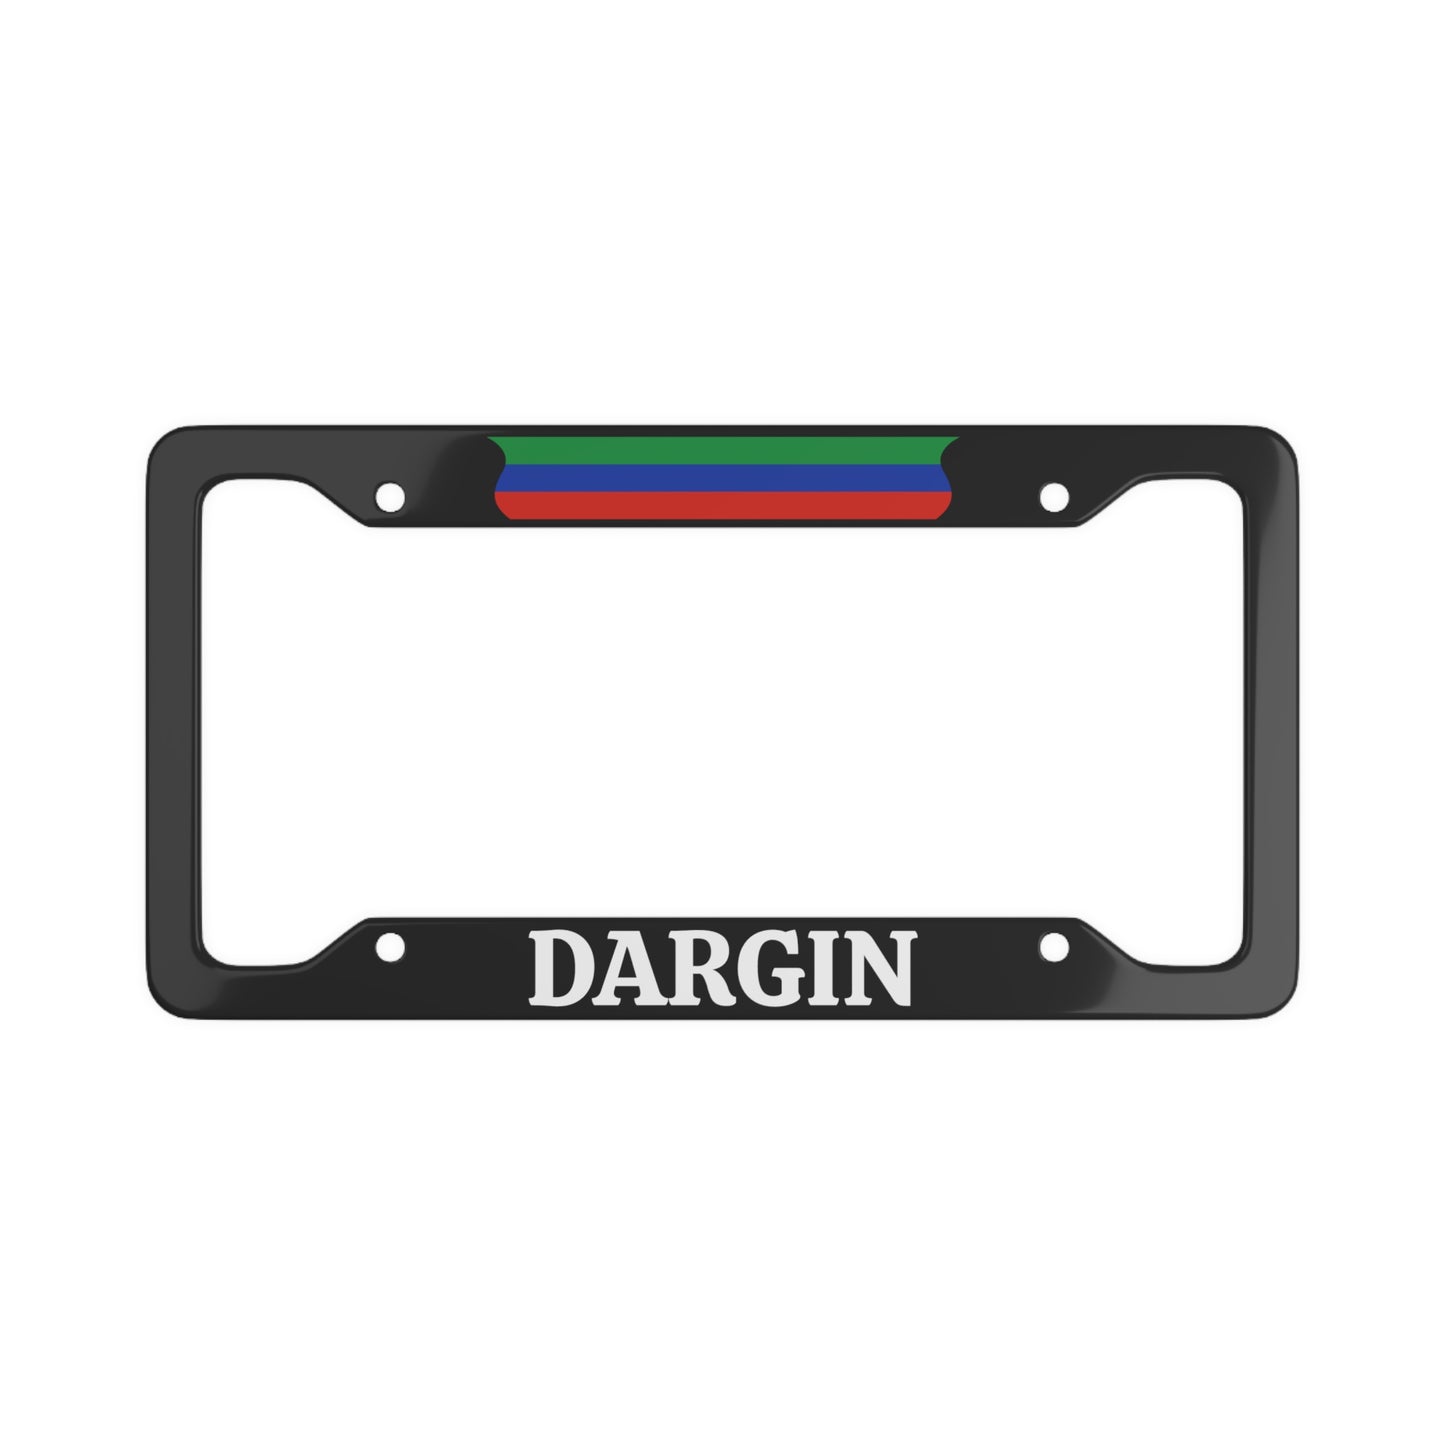 Dargin License Plate Frame